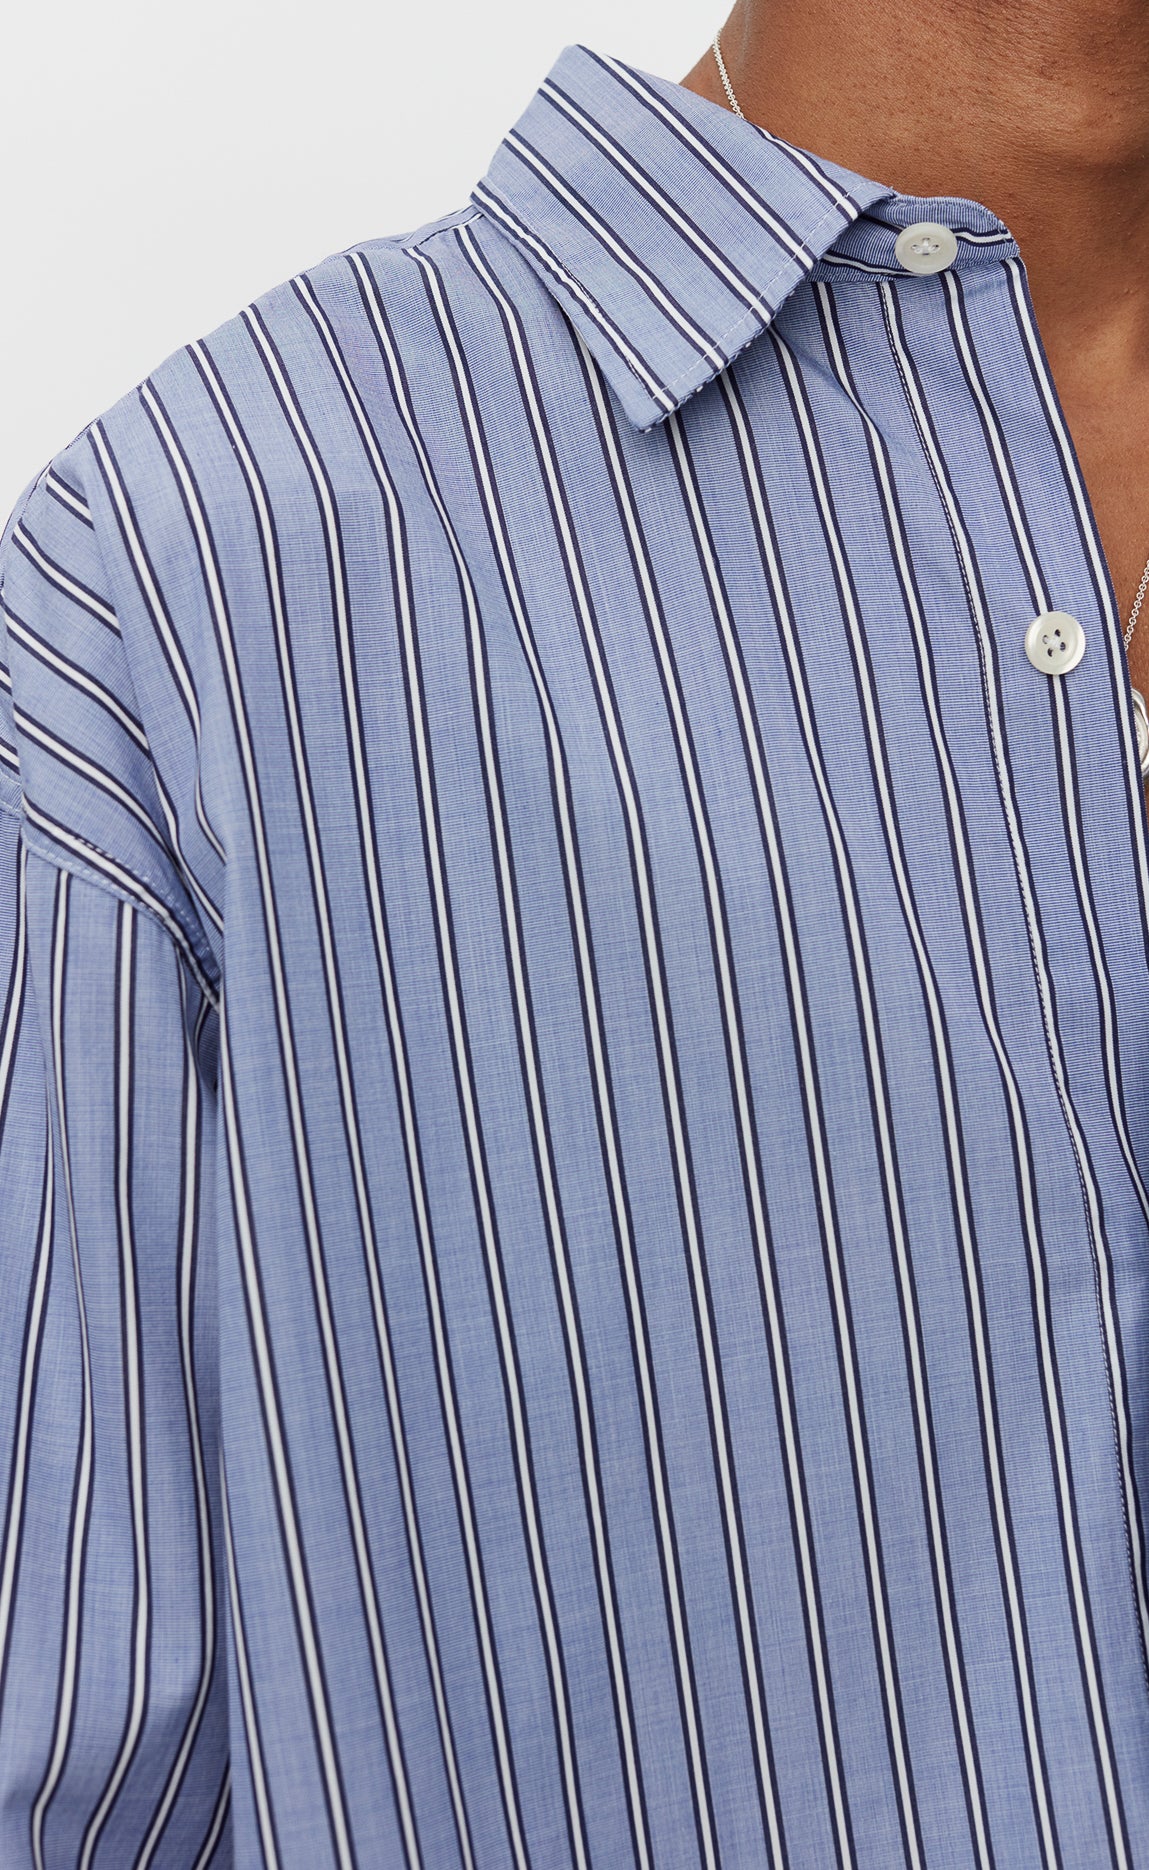 Tendency Shirt - Office Stripe